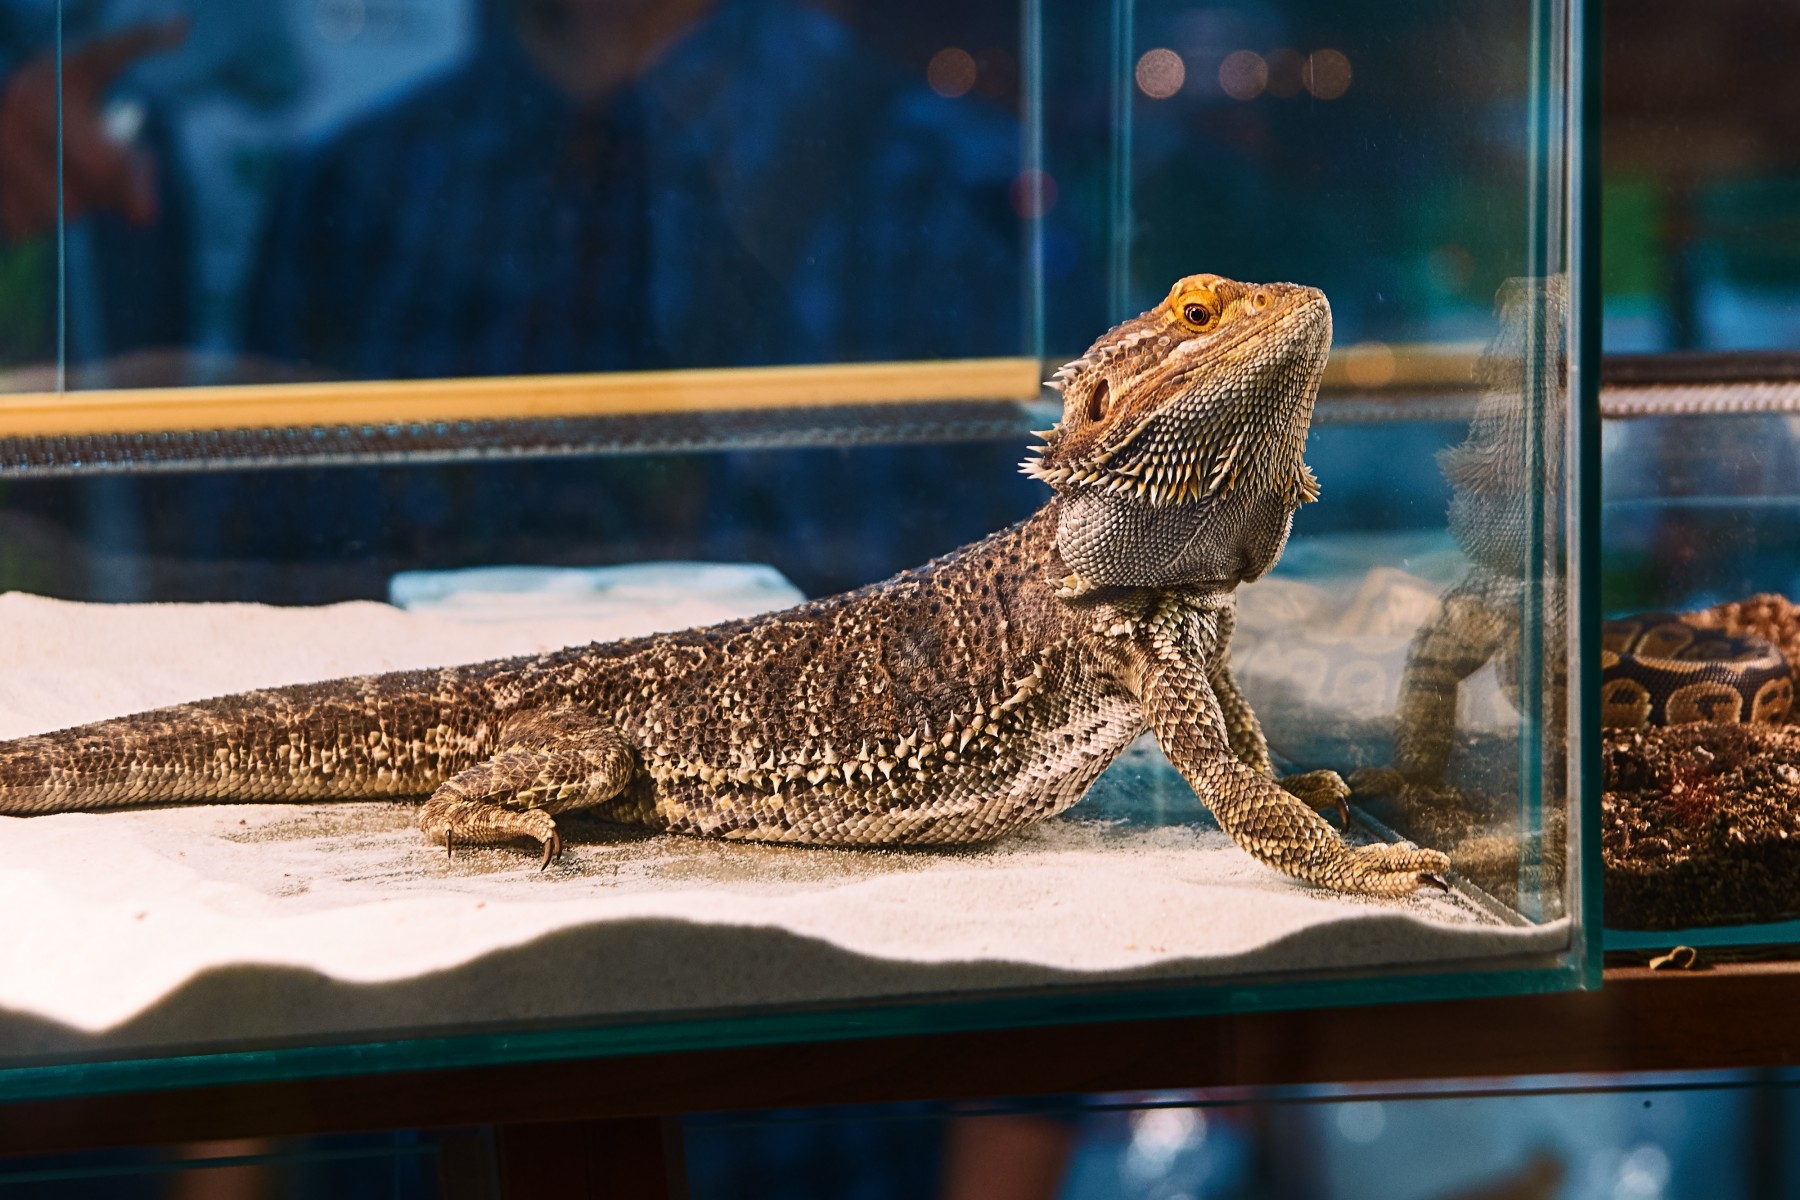 A lizard kept in a tank as a pet